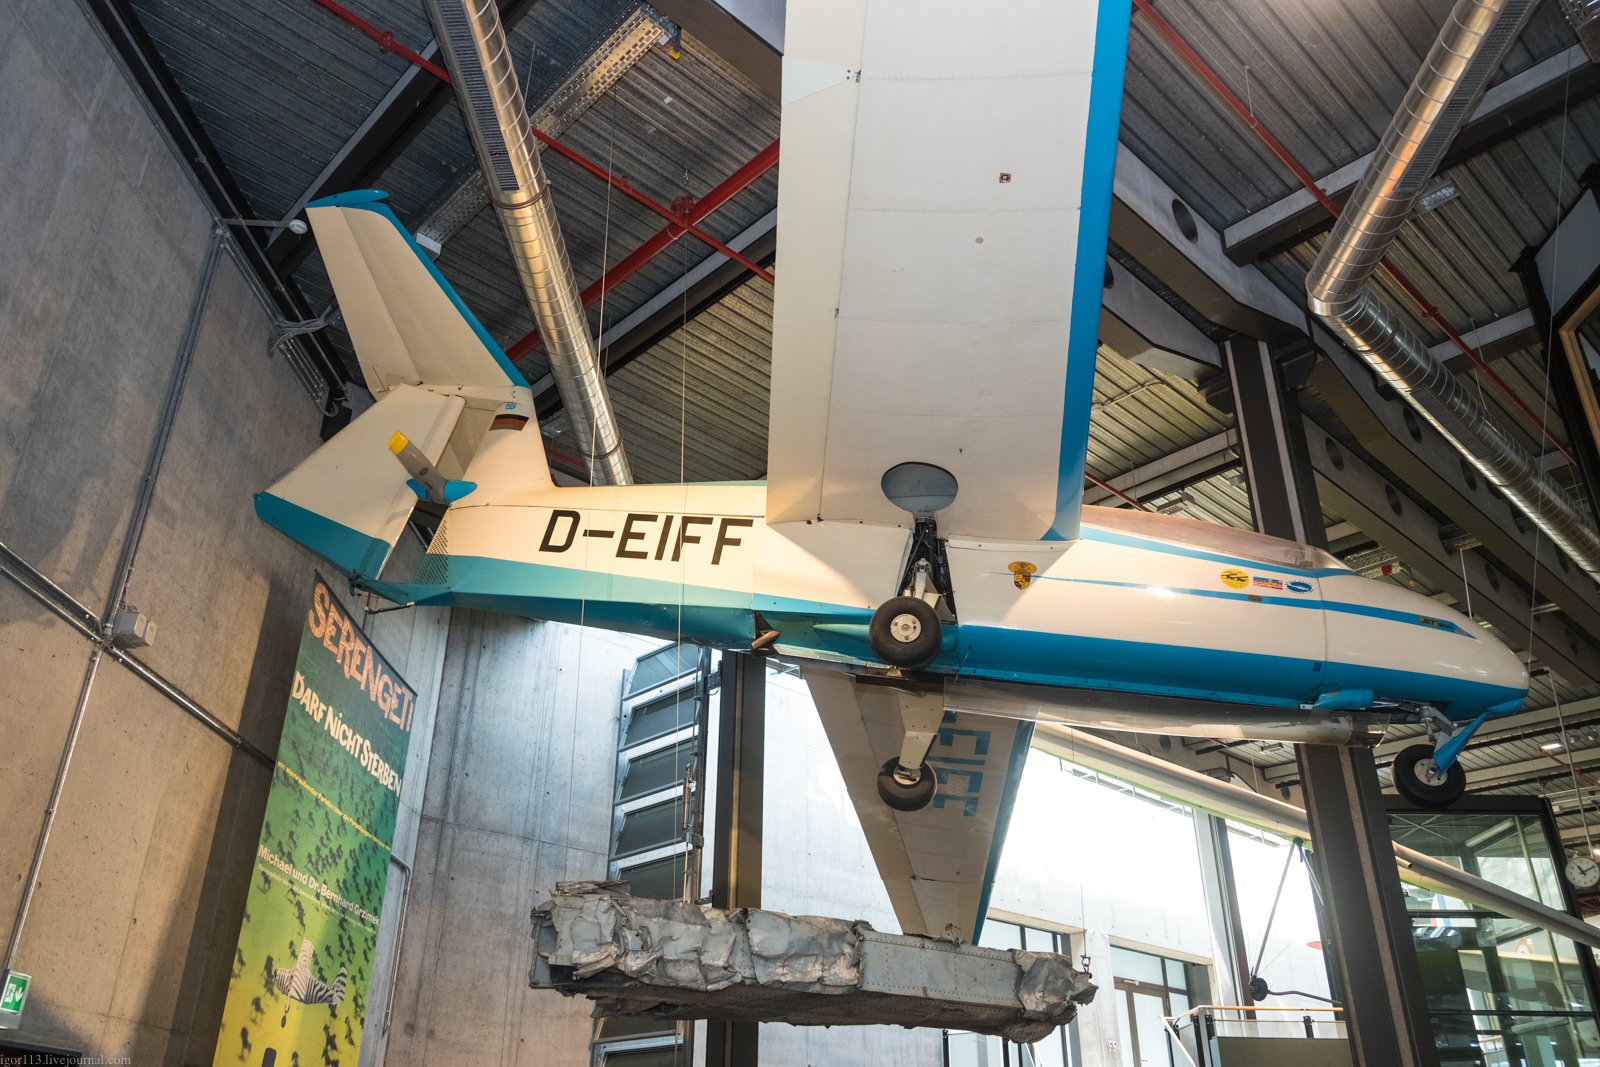 Технический музей Берлина : легкий самолет Rhein-Flugzeugbau RW3-P75 